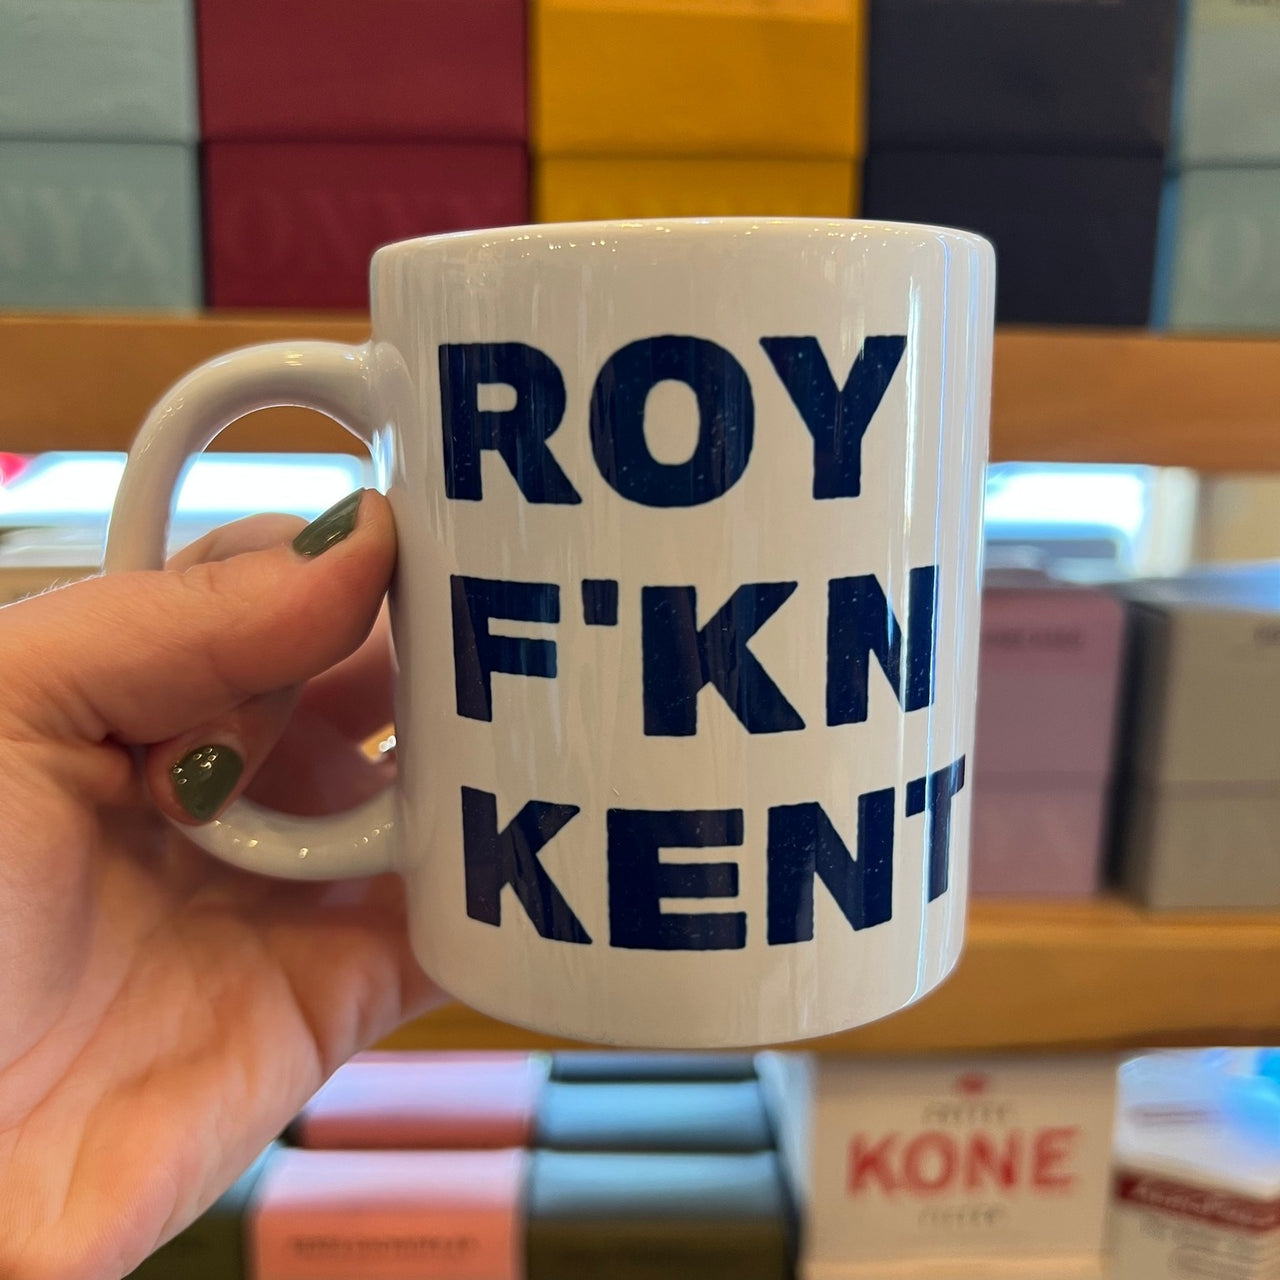 Roy F'kn Kent Mug